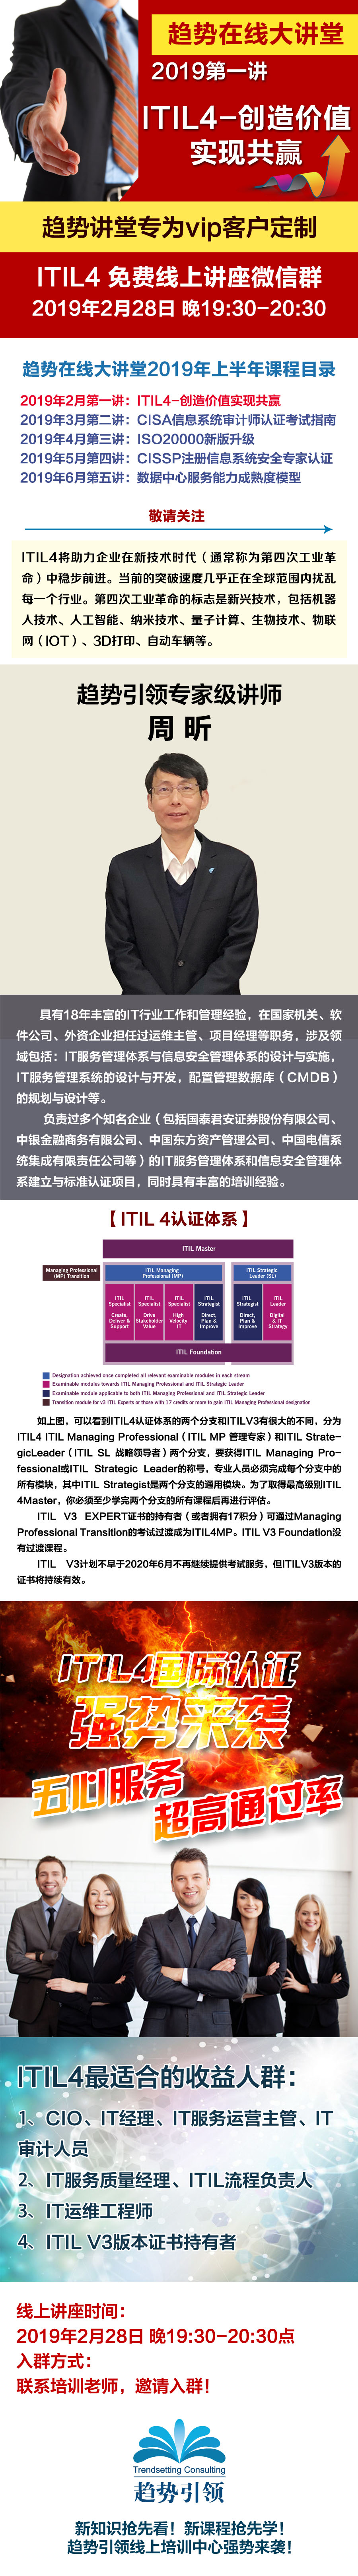 ITIL4-在线讲堂内容-周昕.jpg